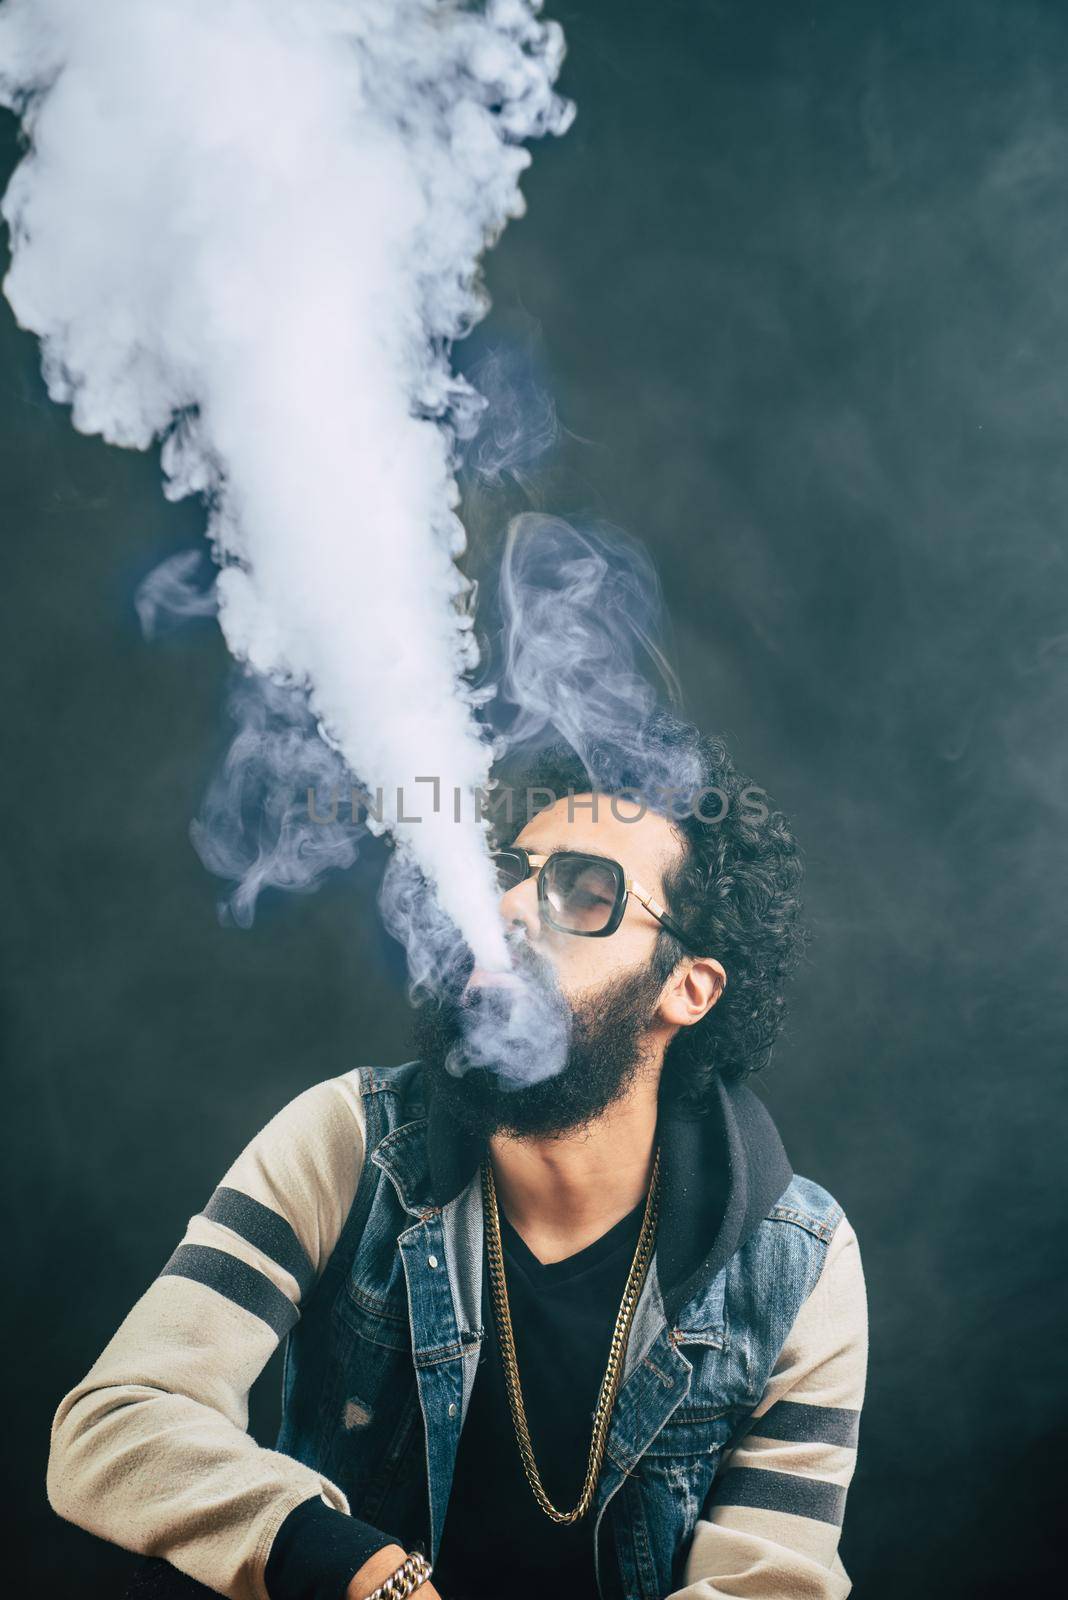 Young man with beard vaping an electronic cigarette upwards. Vaper hipster smoke vaporizer. Black background